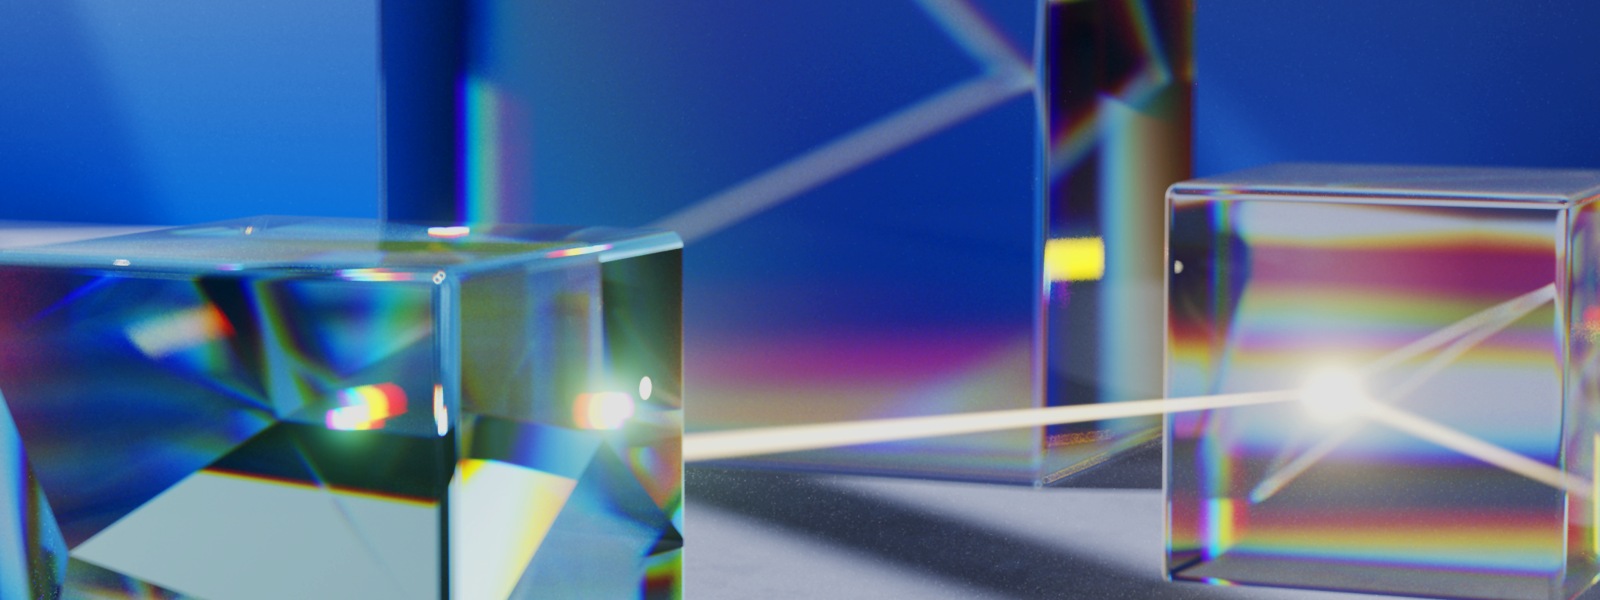 Light refracting through prisms